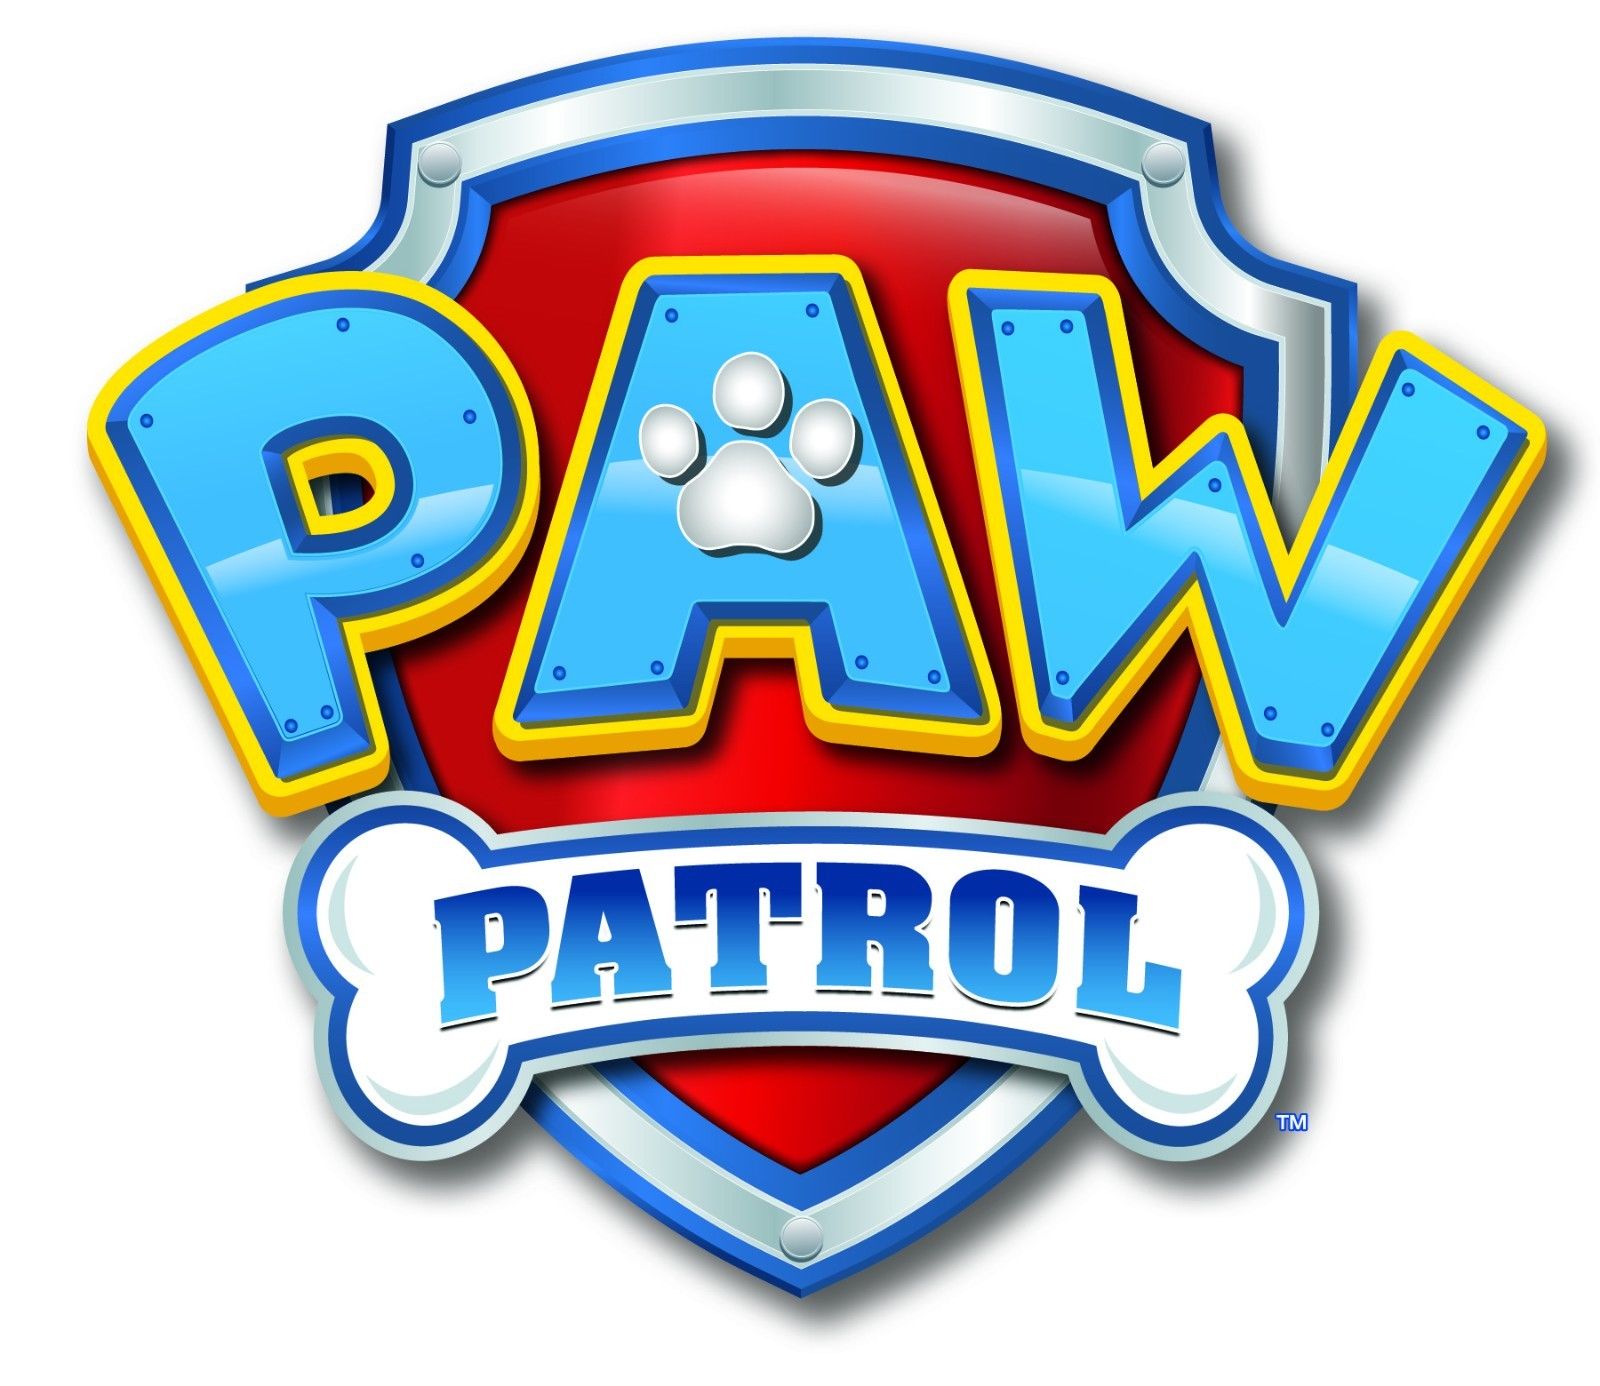 Paw patrol shield.